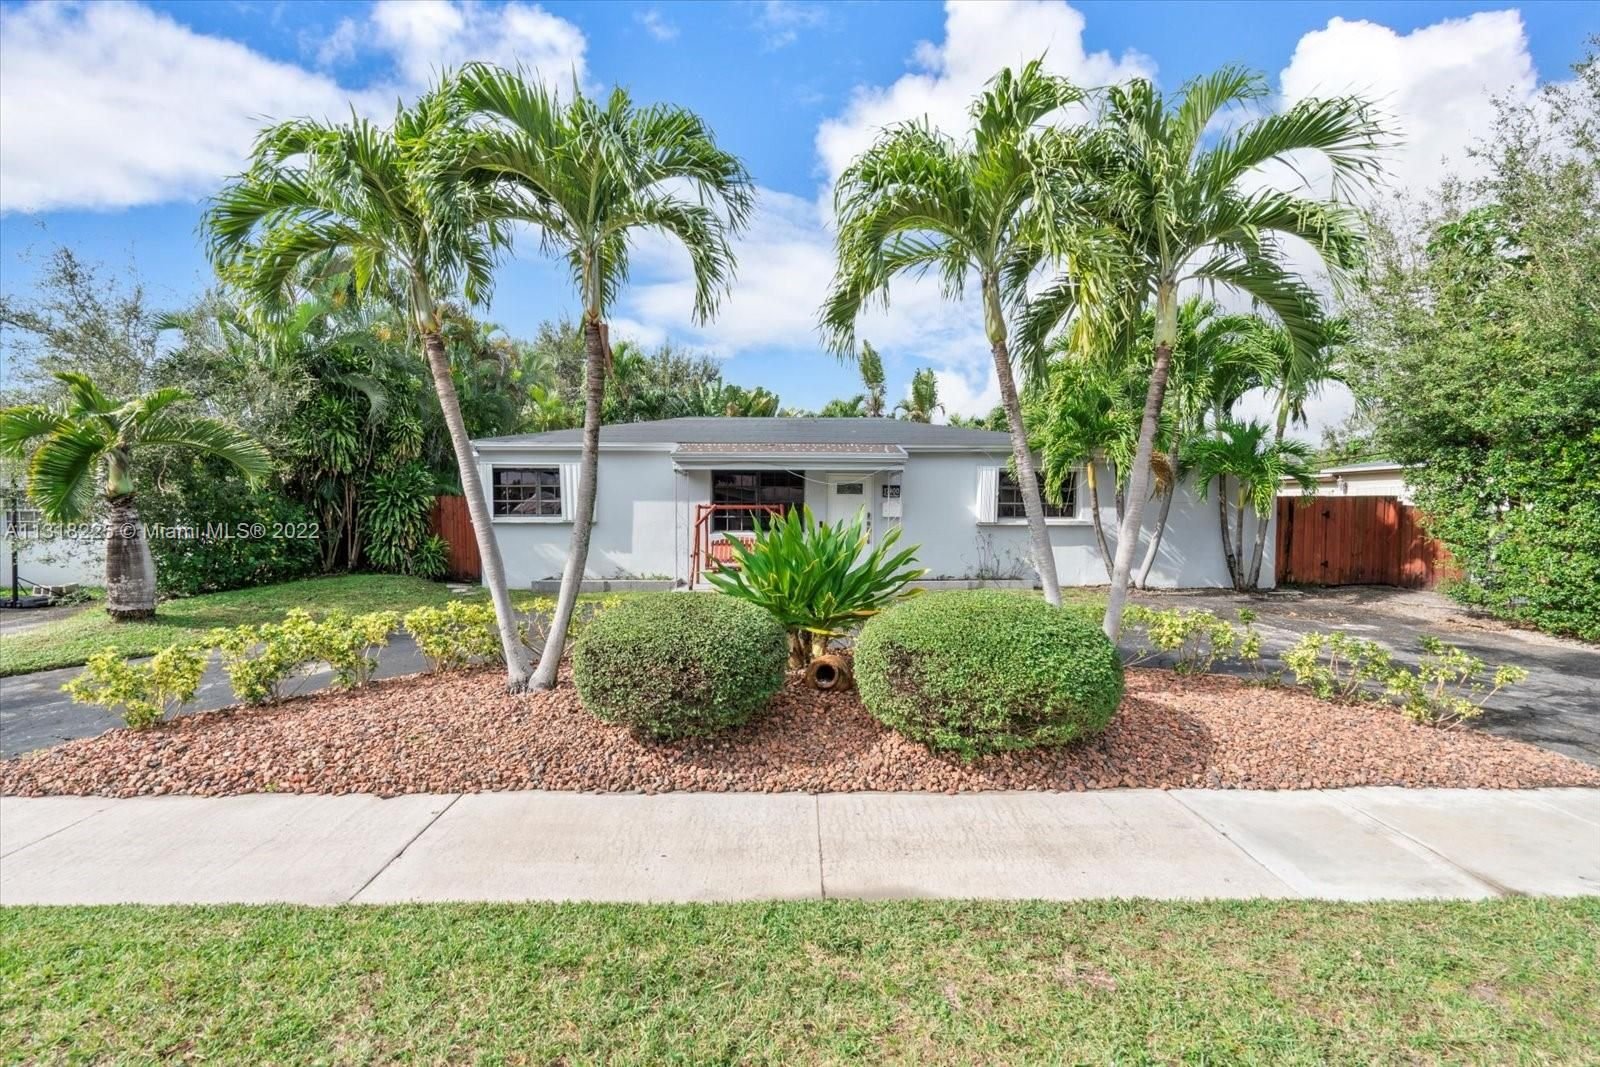 Real estate property located at 17400 12th Ave, Miami-Dade County, Miami, FL